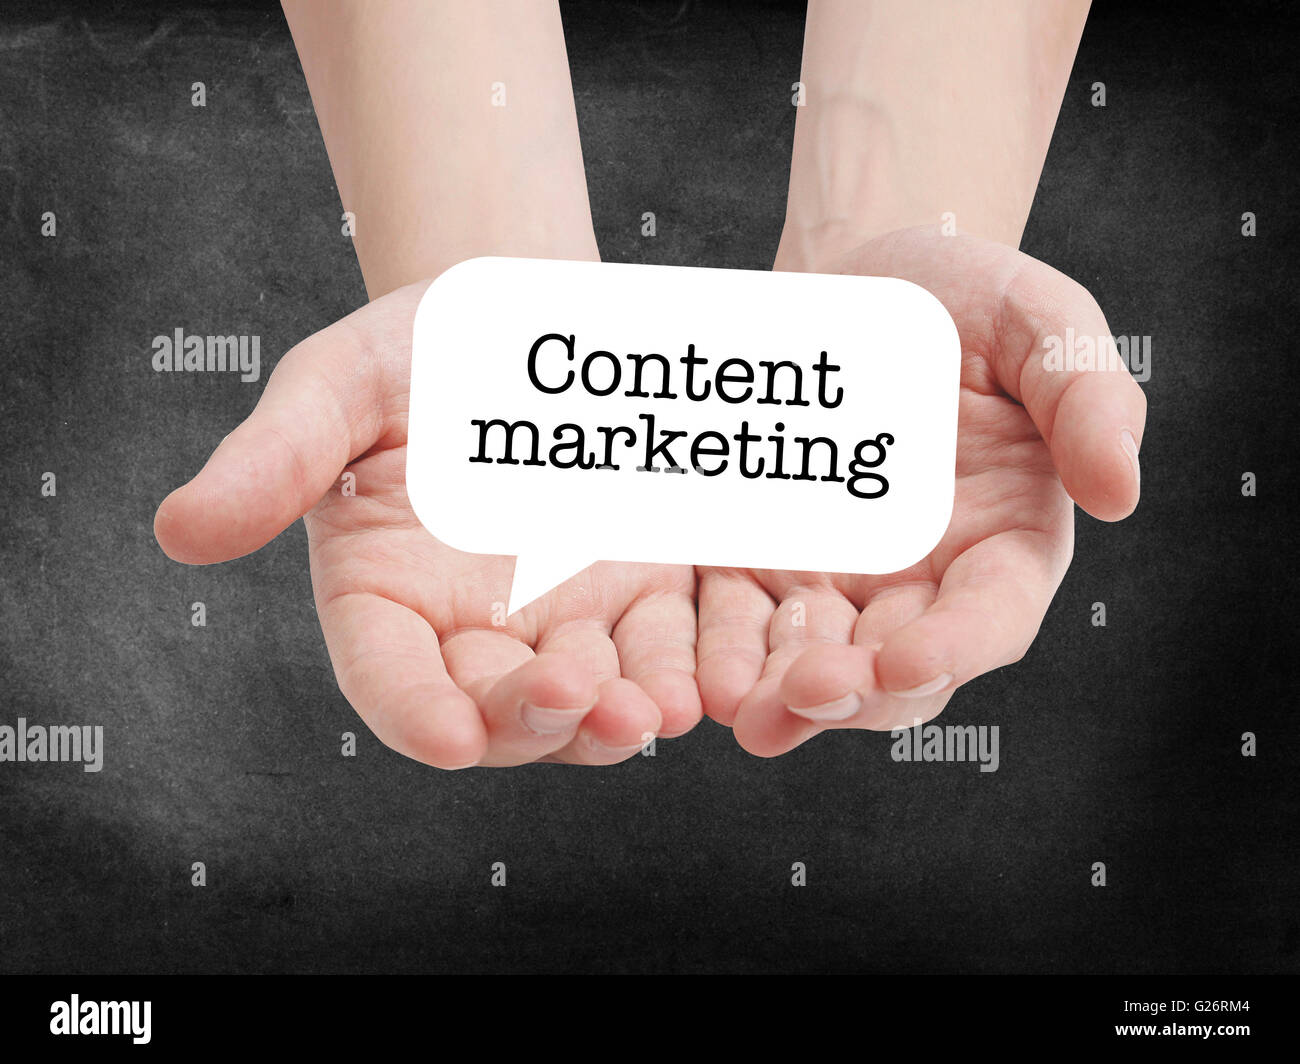 Content Marketing written on a speechbubble Stock Photo